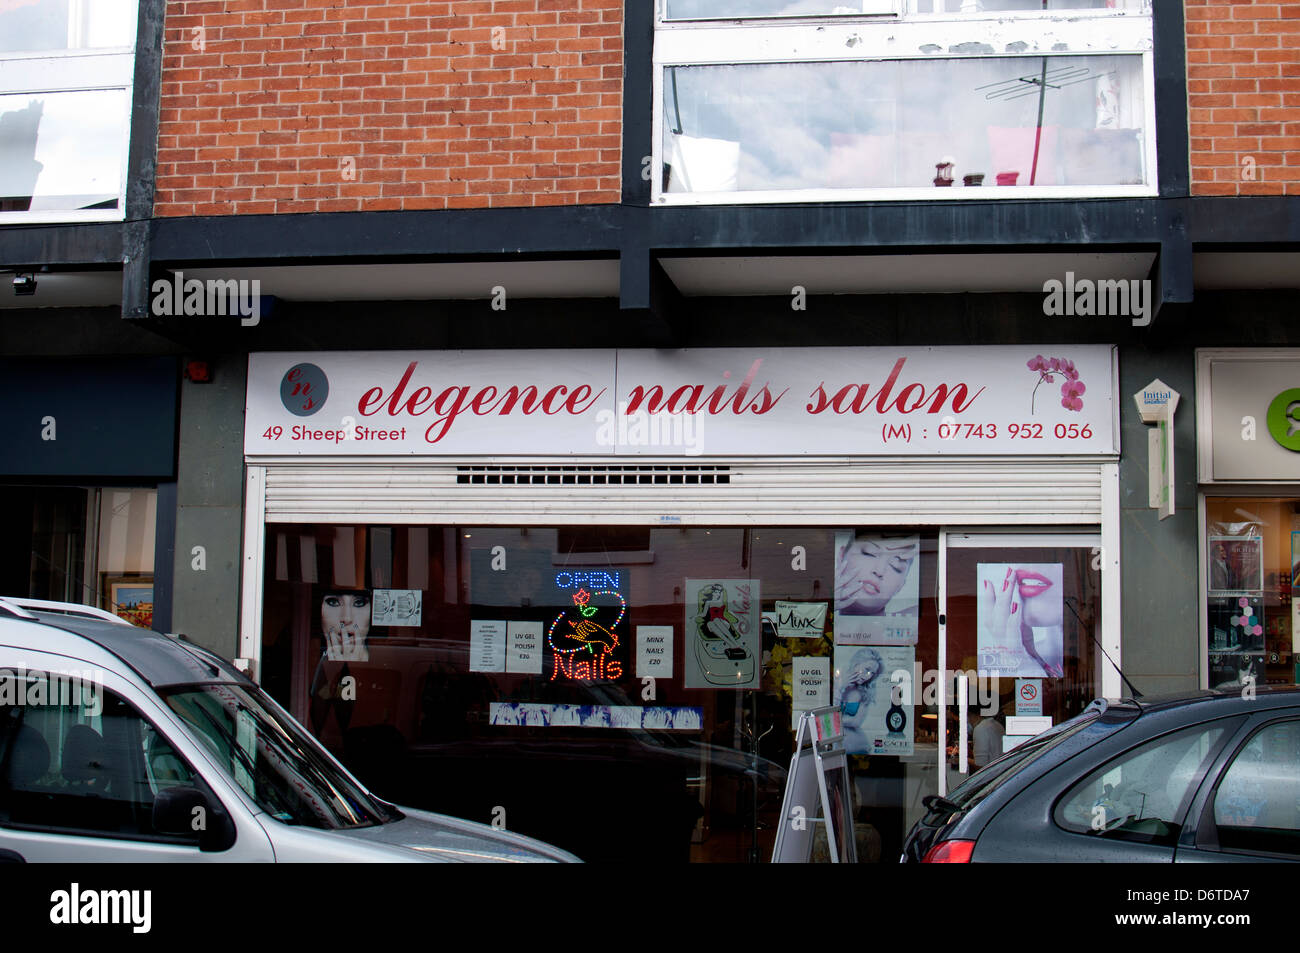 Spelling mistake on nails salon, elegence instead of elegance. Stock Photo